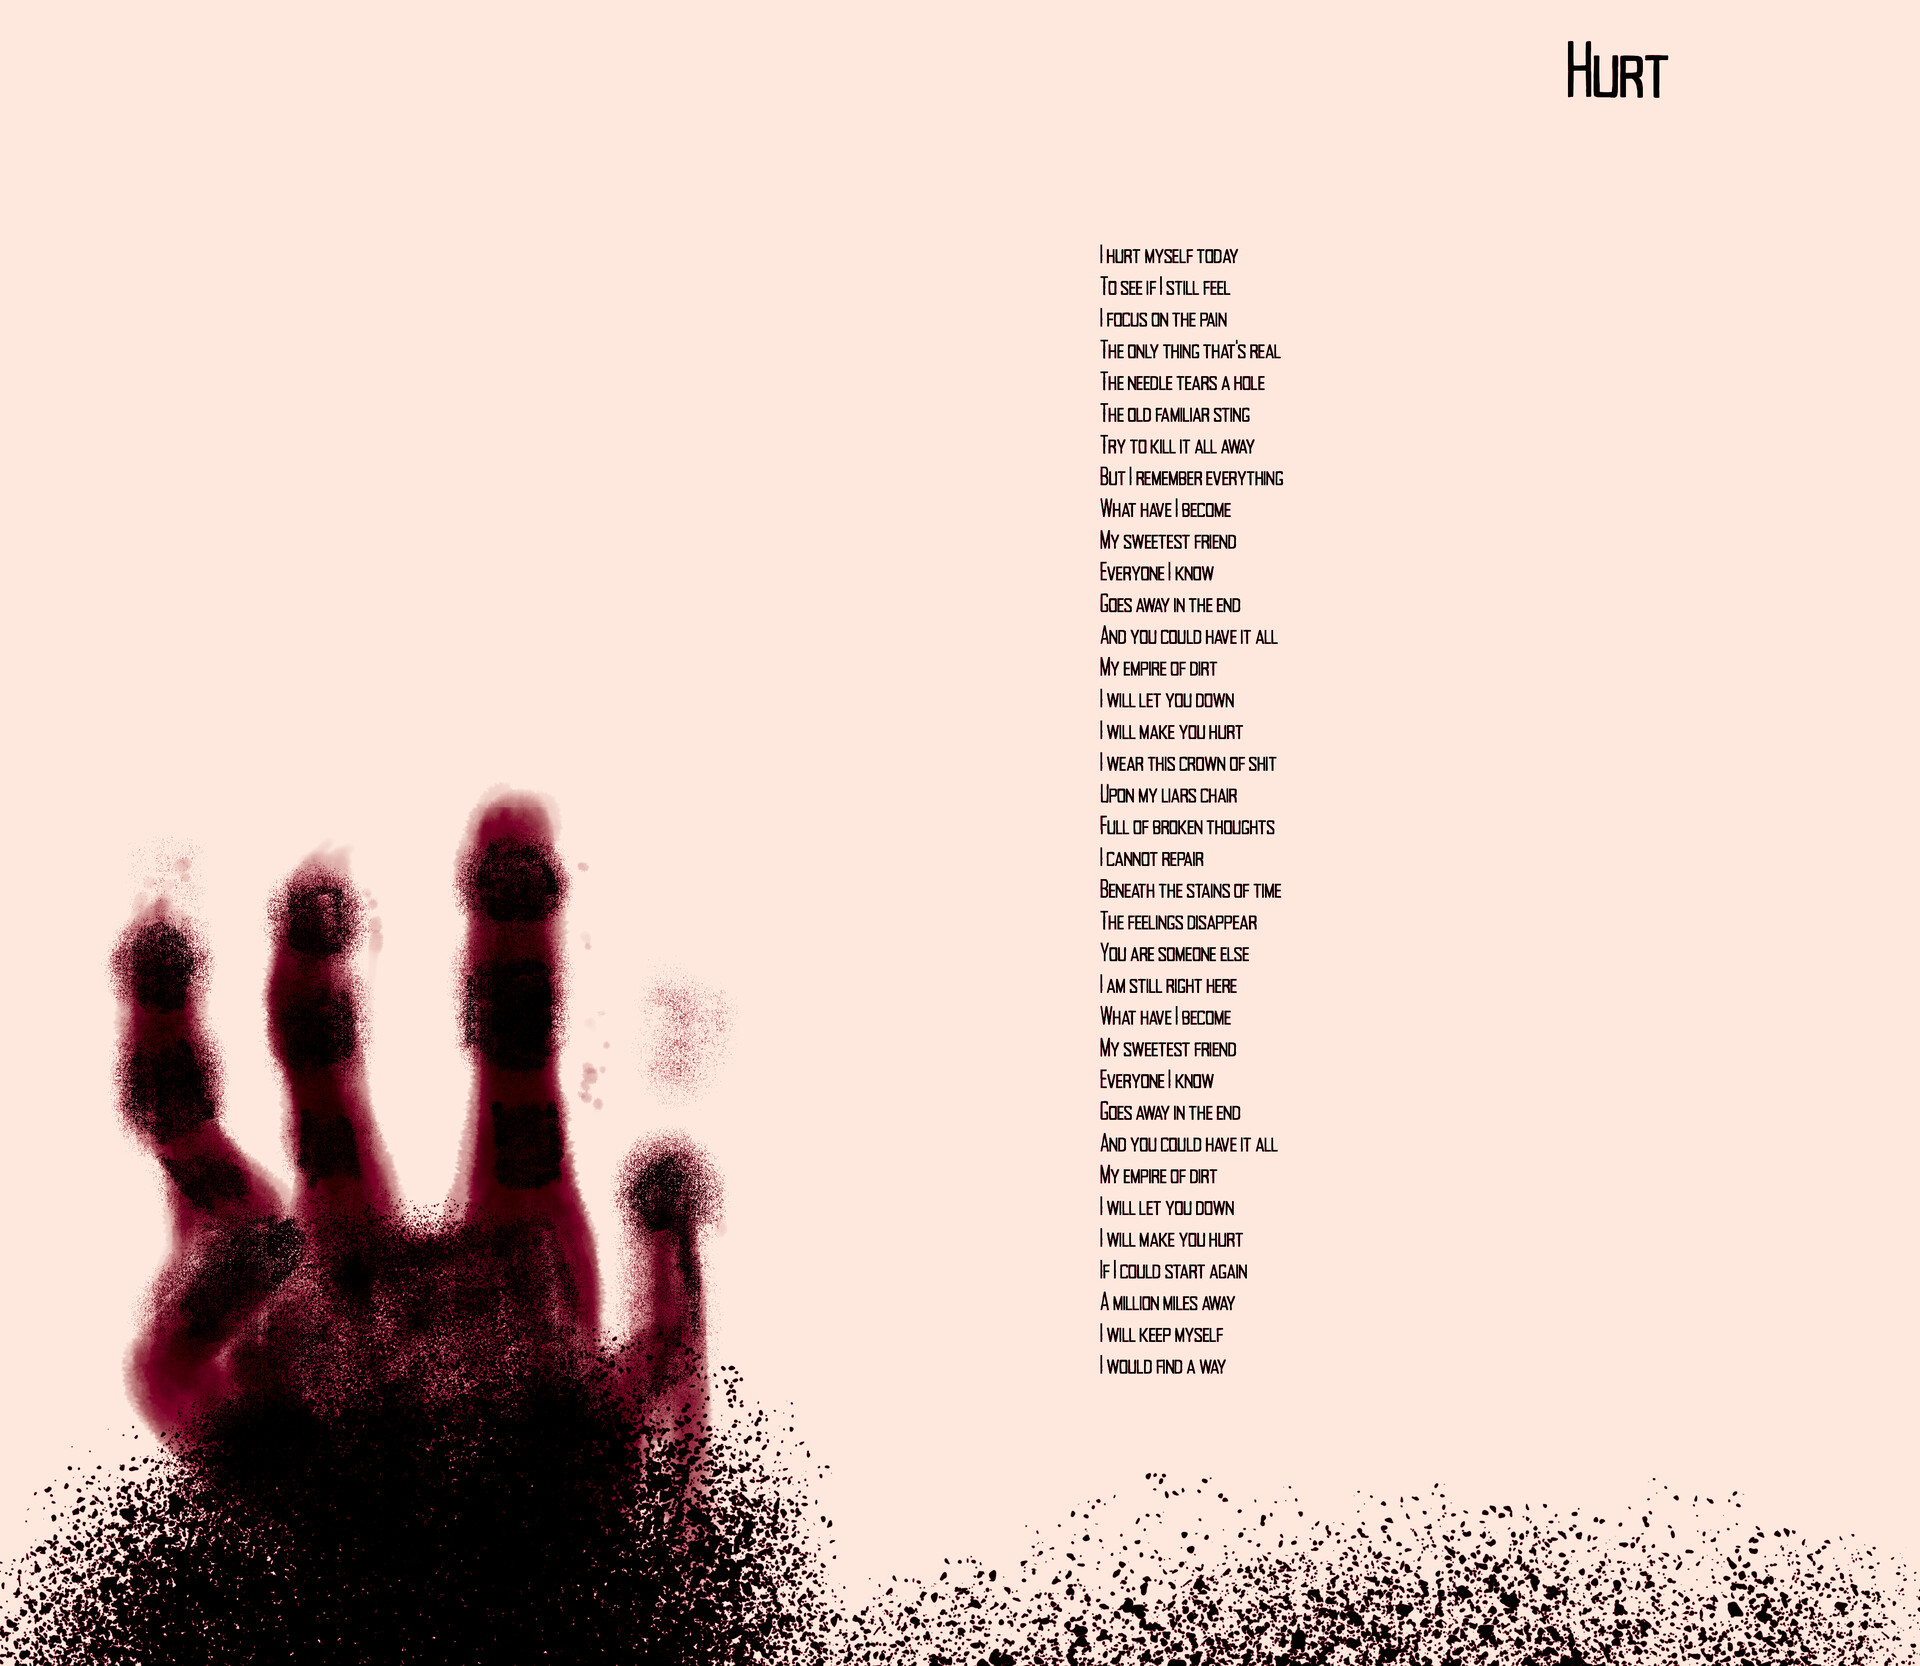 ArtStation - Nine Inch Nails: The Downward Spiral Cover - Redesign